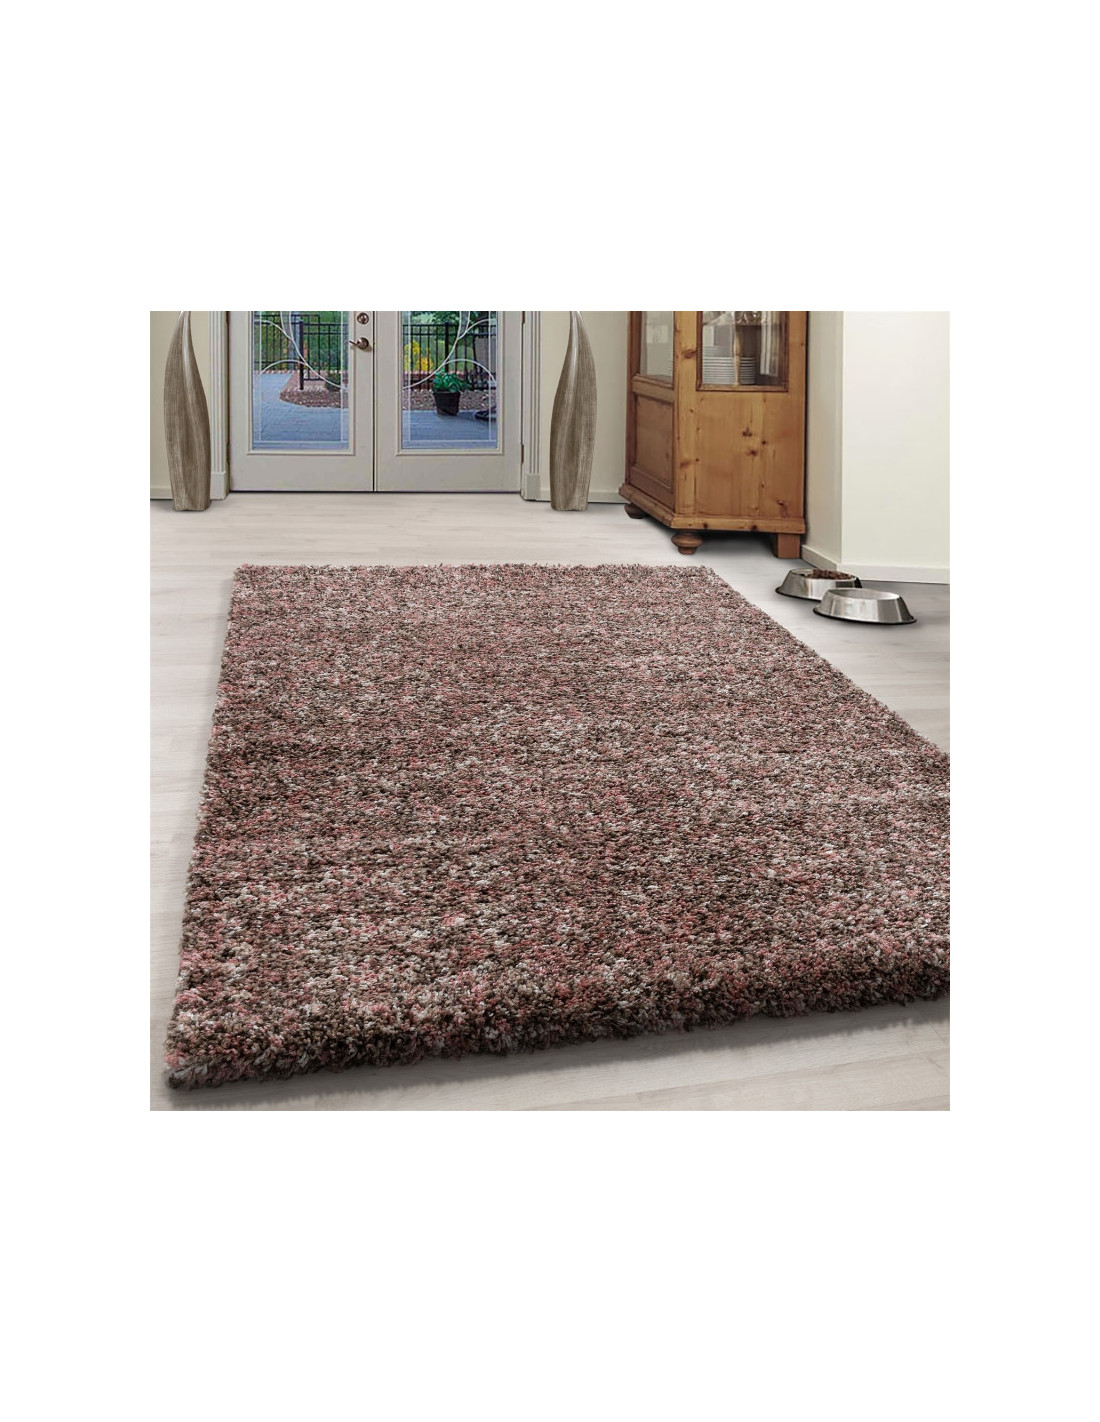 Vardagsrum shaggy matta hög kvalitet djup lugg ros kräm taupe fläckig